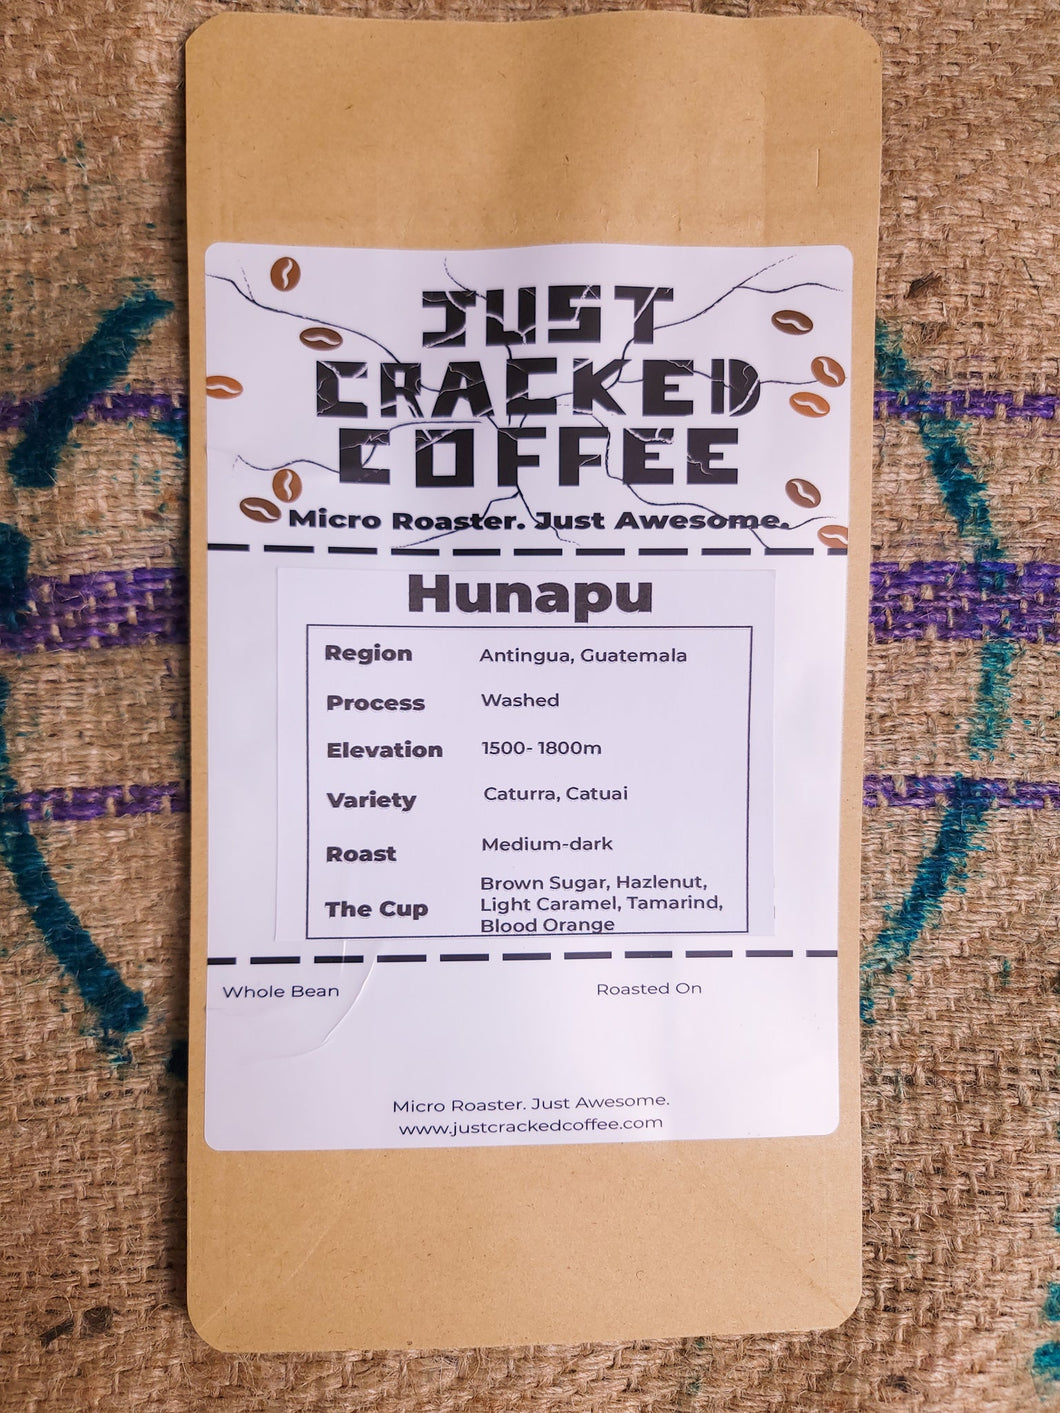 [Subscription] Hunapu, Guatemala